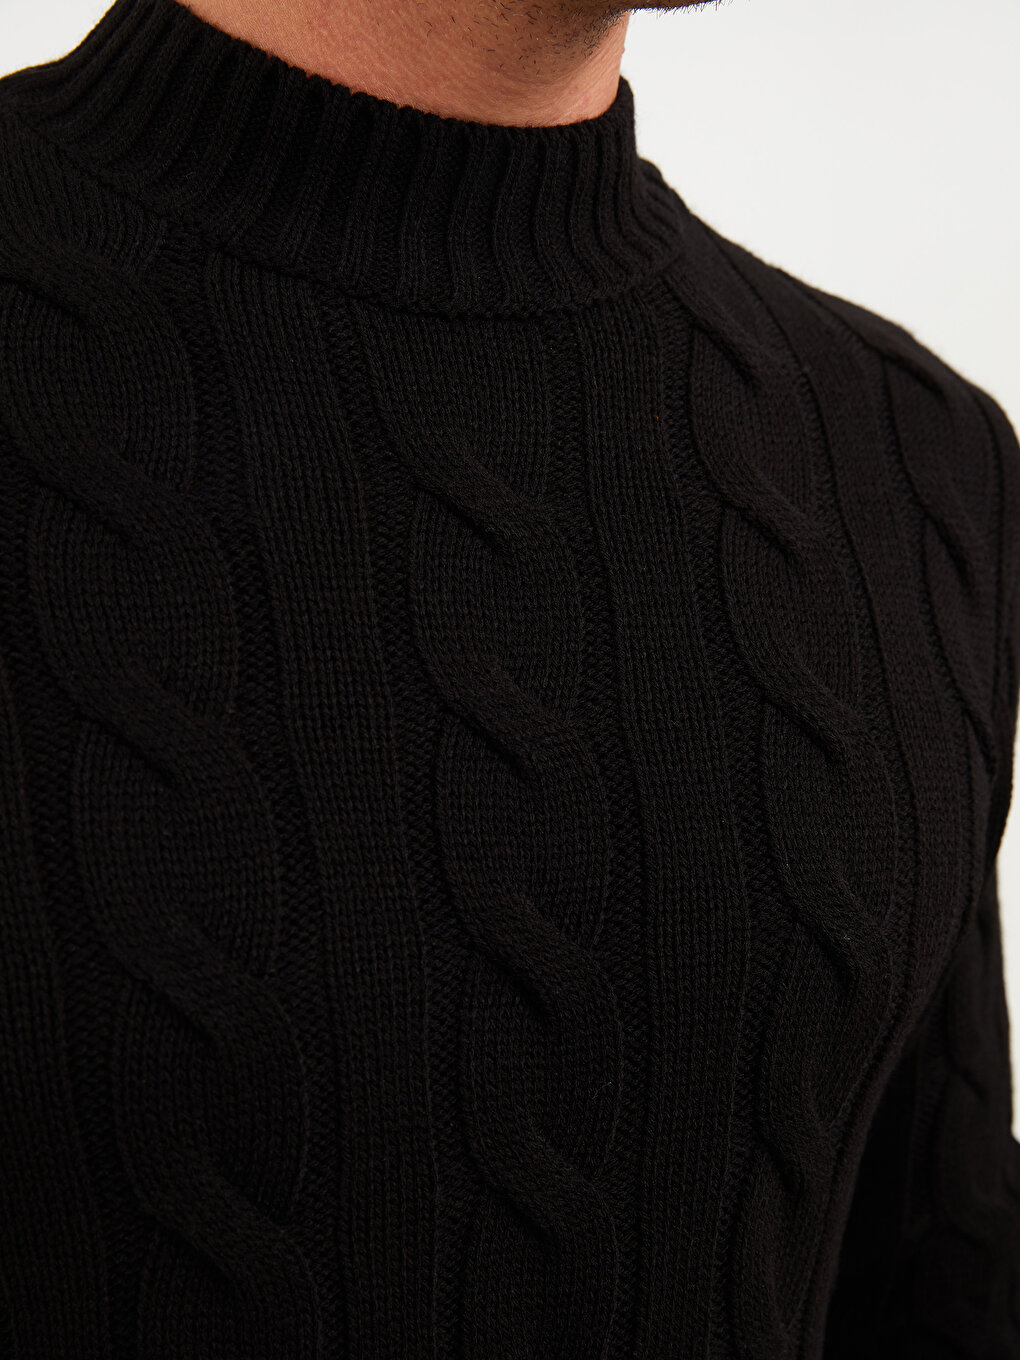 Half Turtleneck Long Sleeve Men's Tricot Sweater -W23415Z8-CVL ...